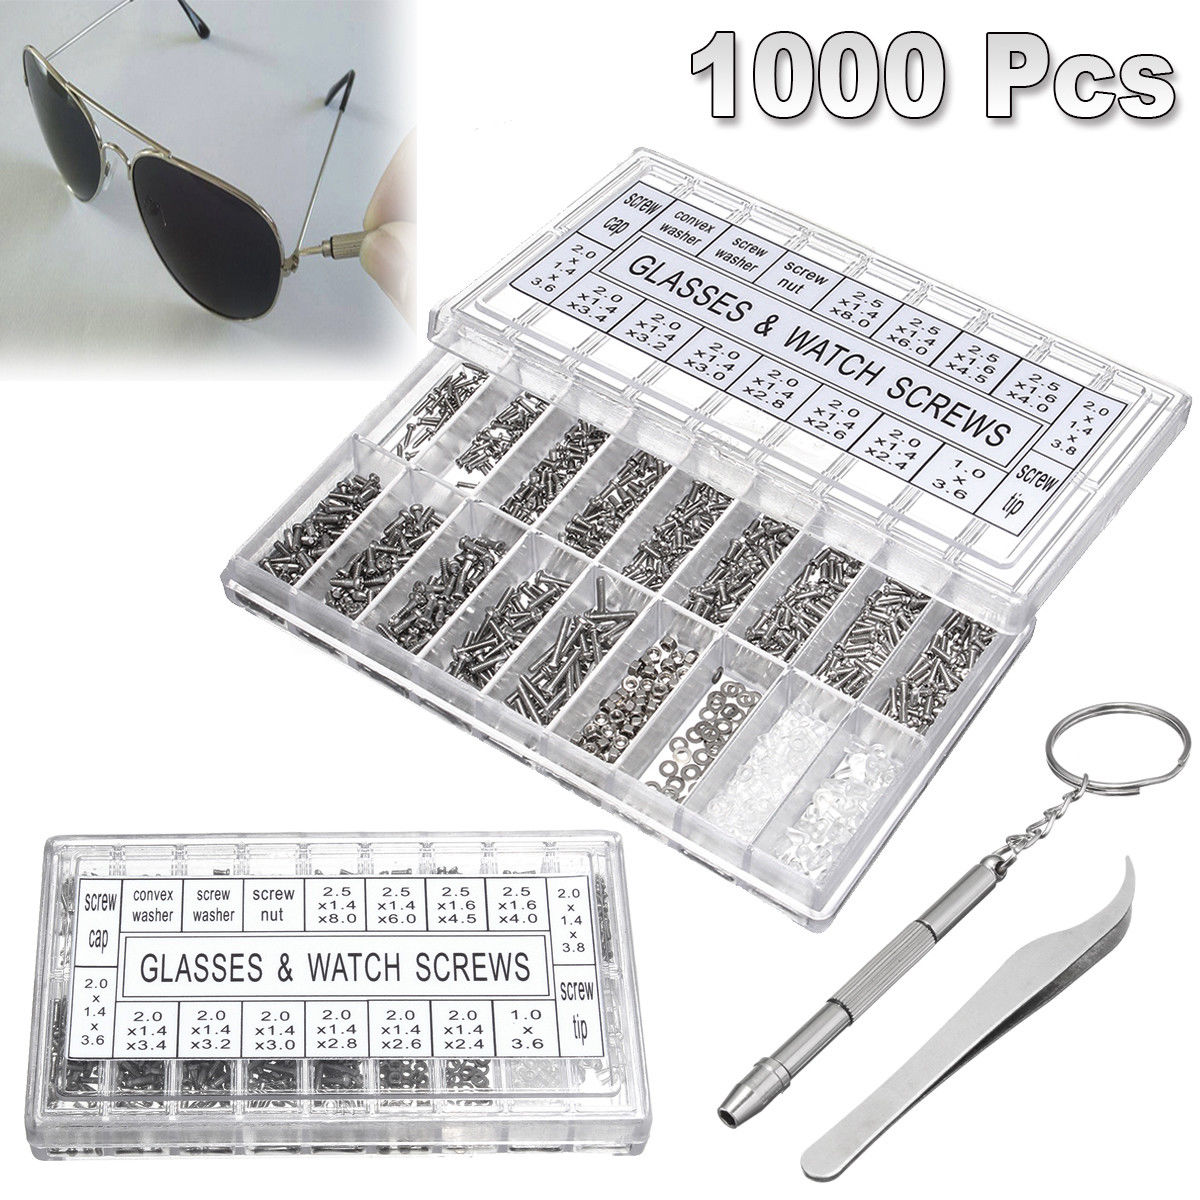 1000Pcs/Set Small Screws Nuts Assortment Kit Glasses Watches Repair Accessories 